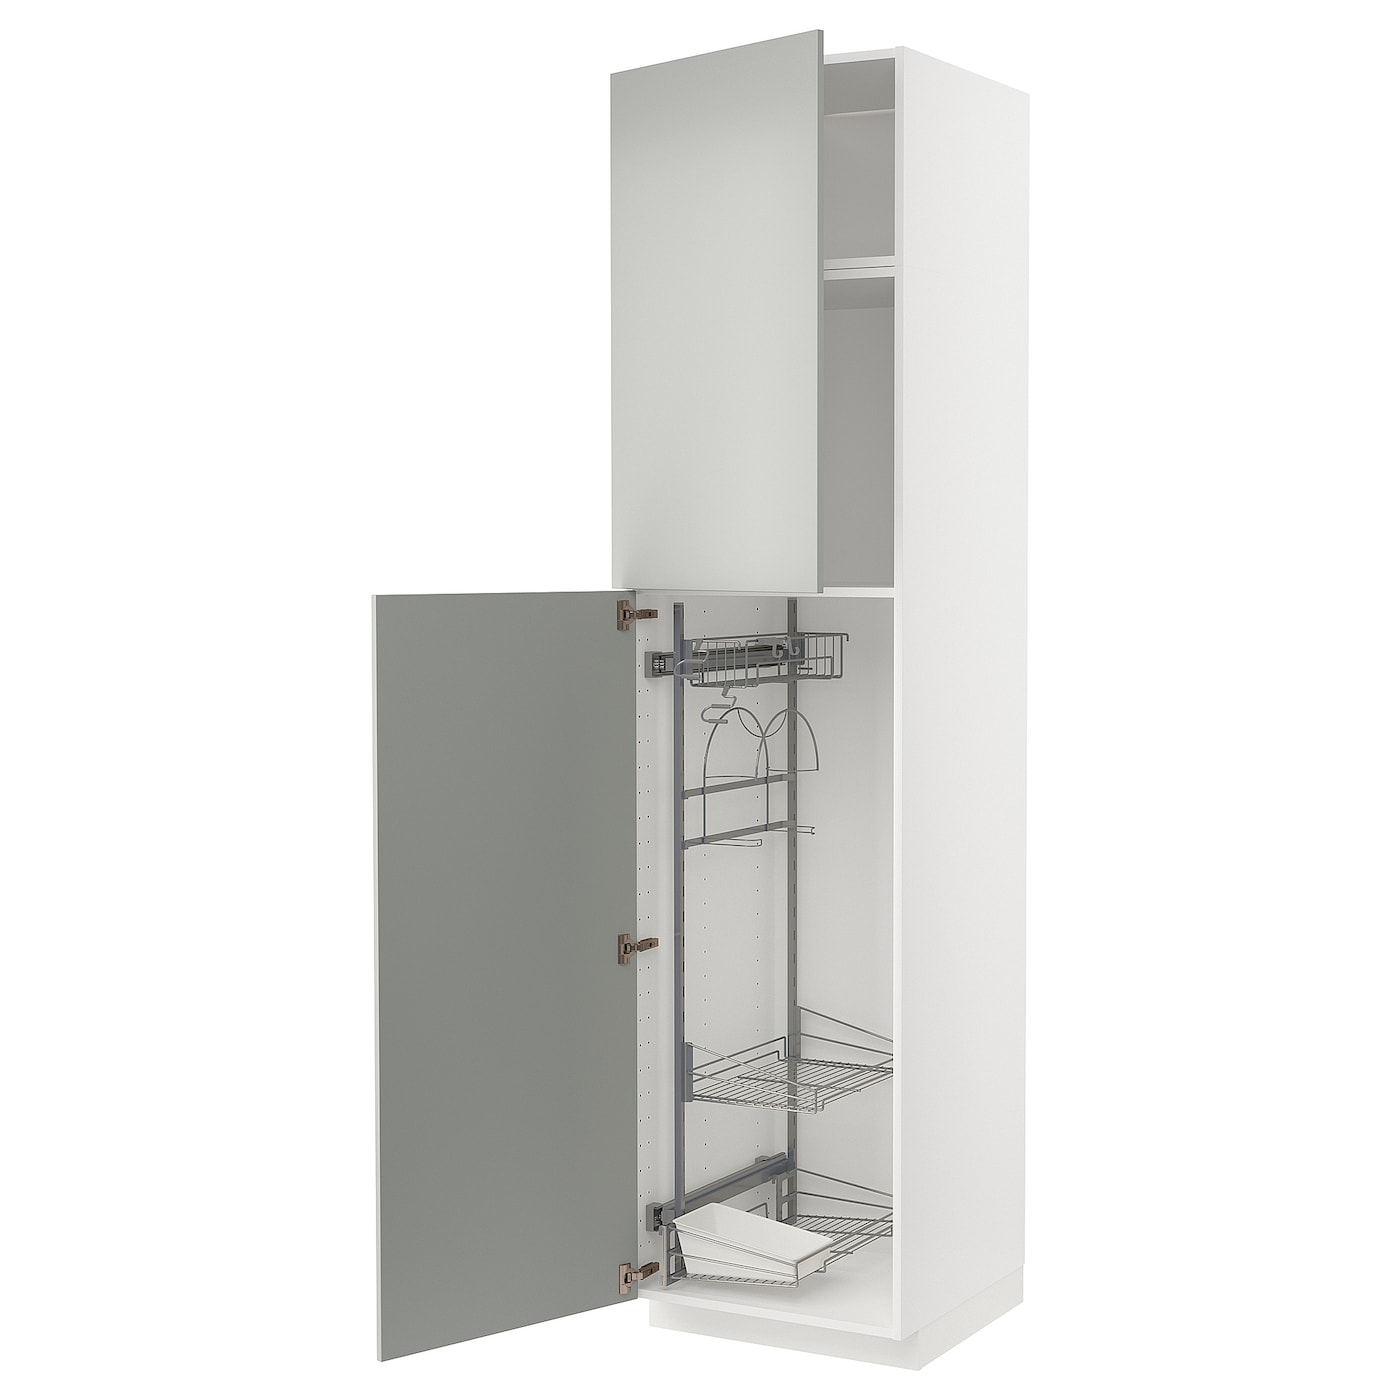 Высокий кухонный шкаф/бытовой - IKEA METOD/МЕТОД ИКЕА, 240х60х60 см, белый/серый